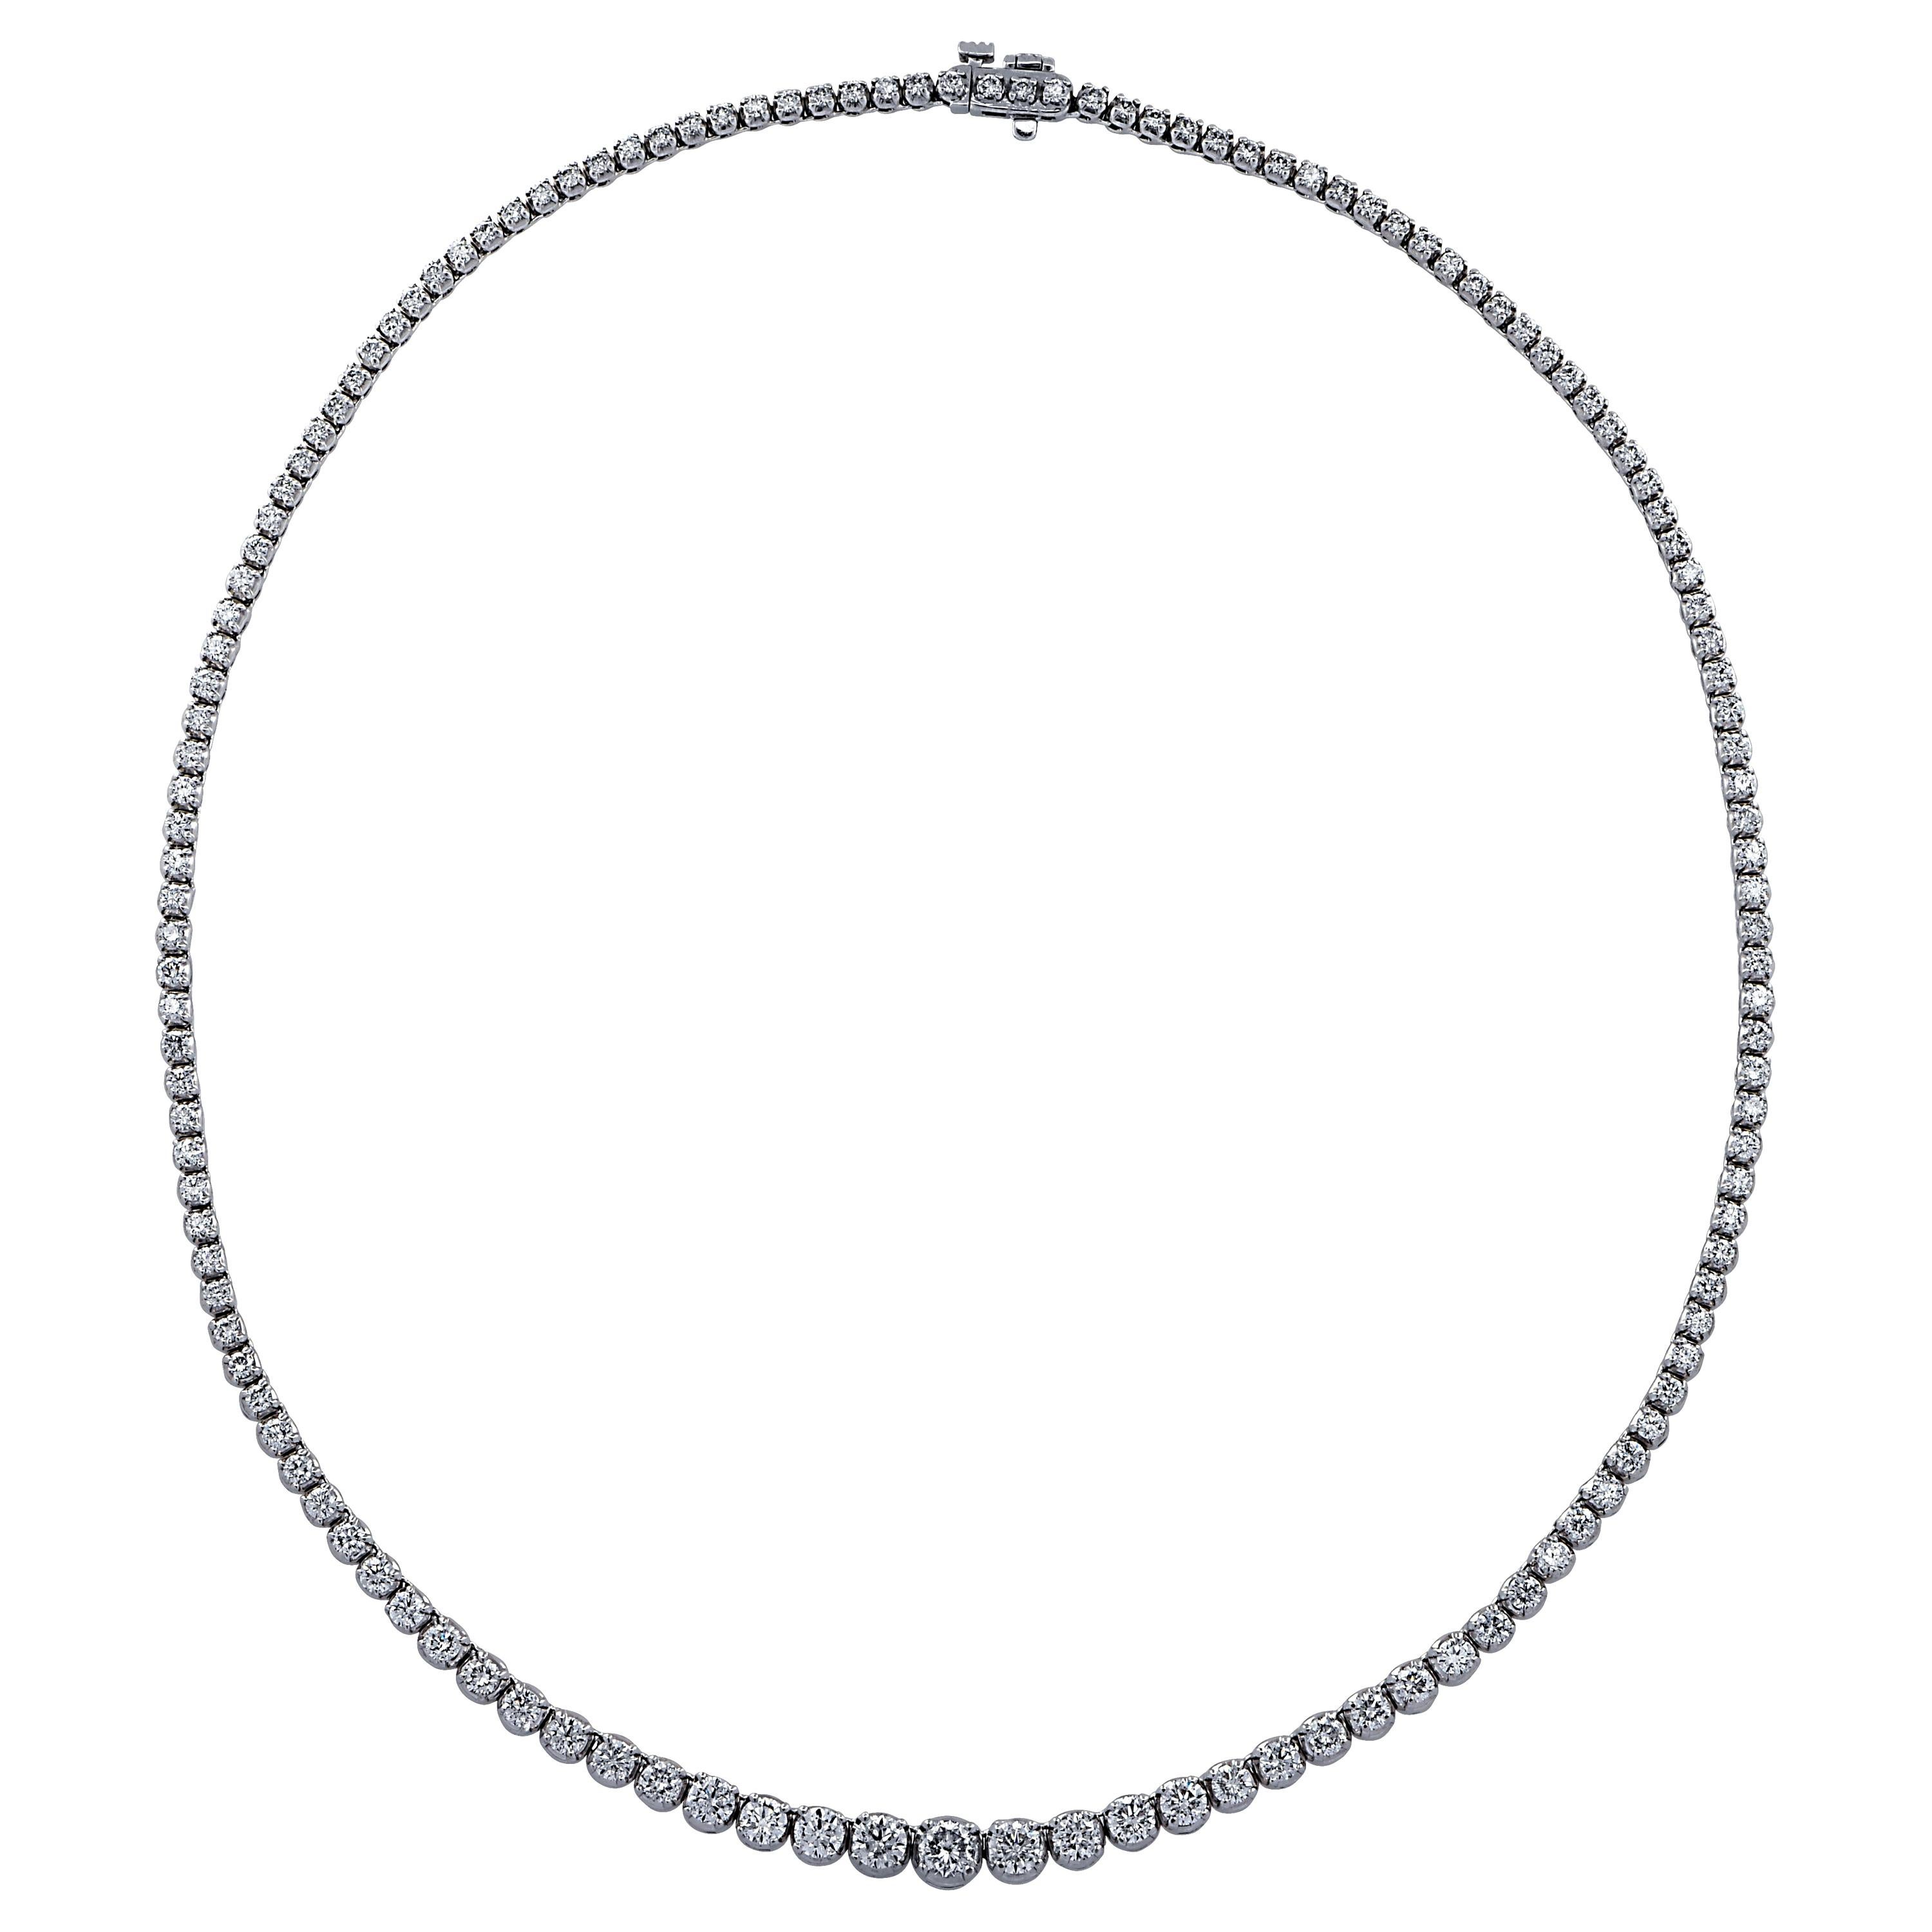 6.5 Carat Diamond Riviere Necklace